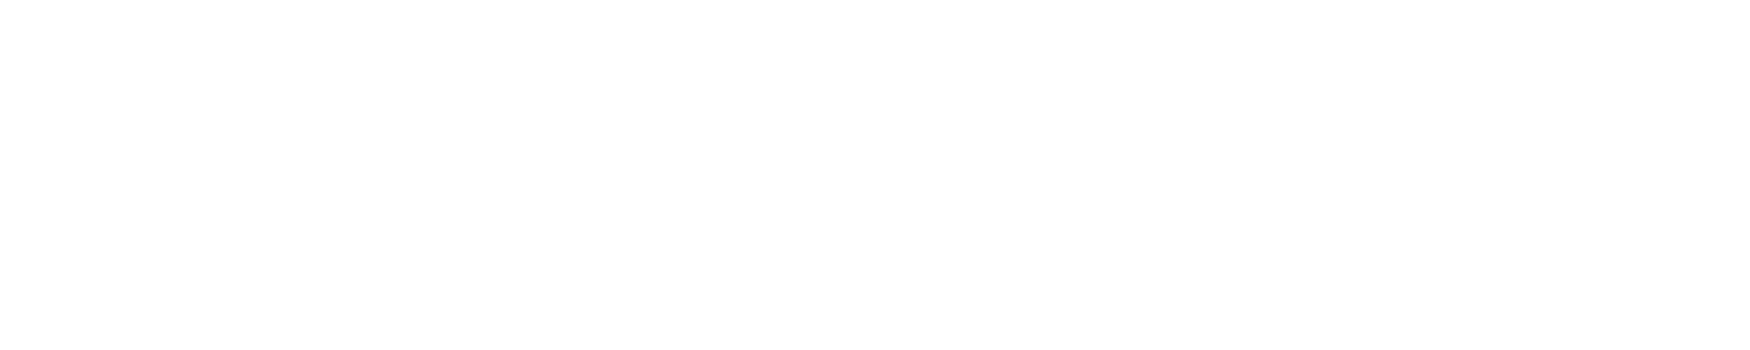 25th Anniversary Video title